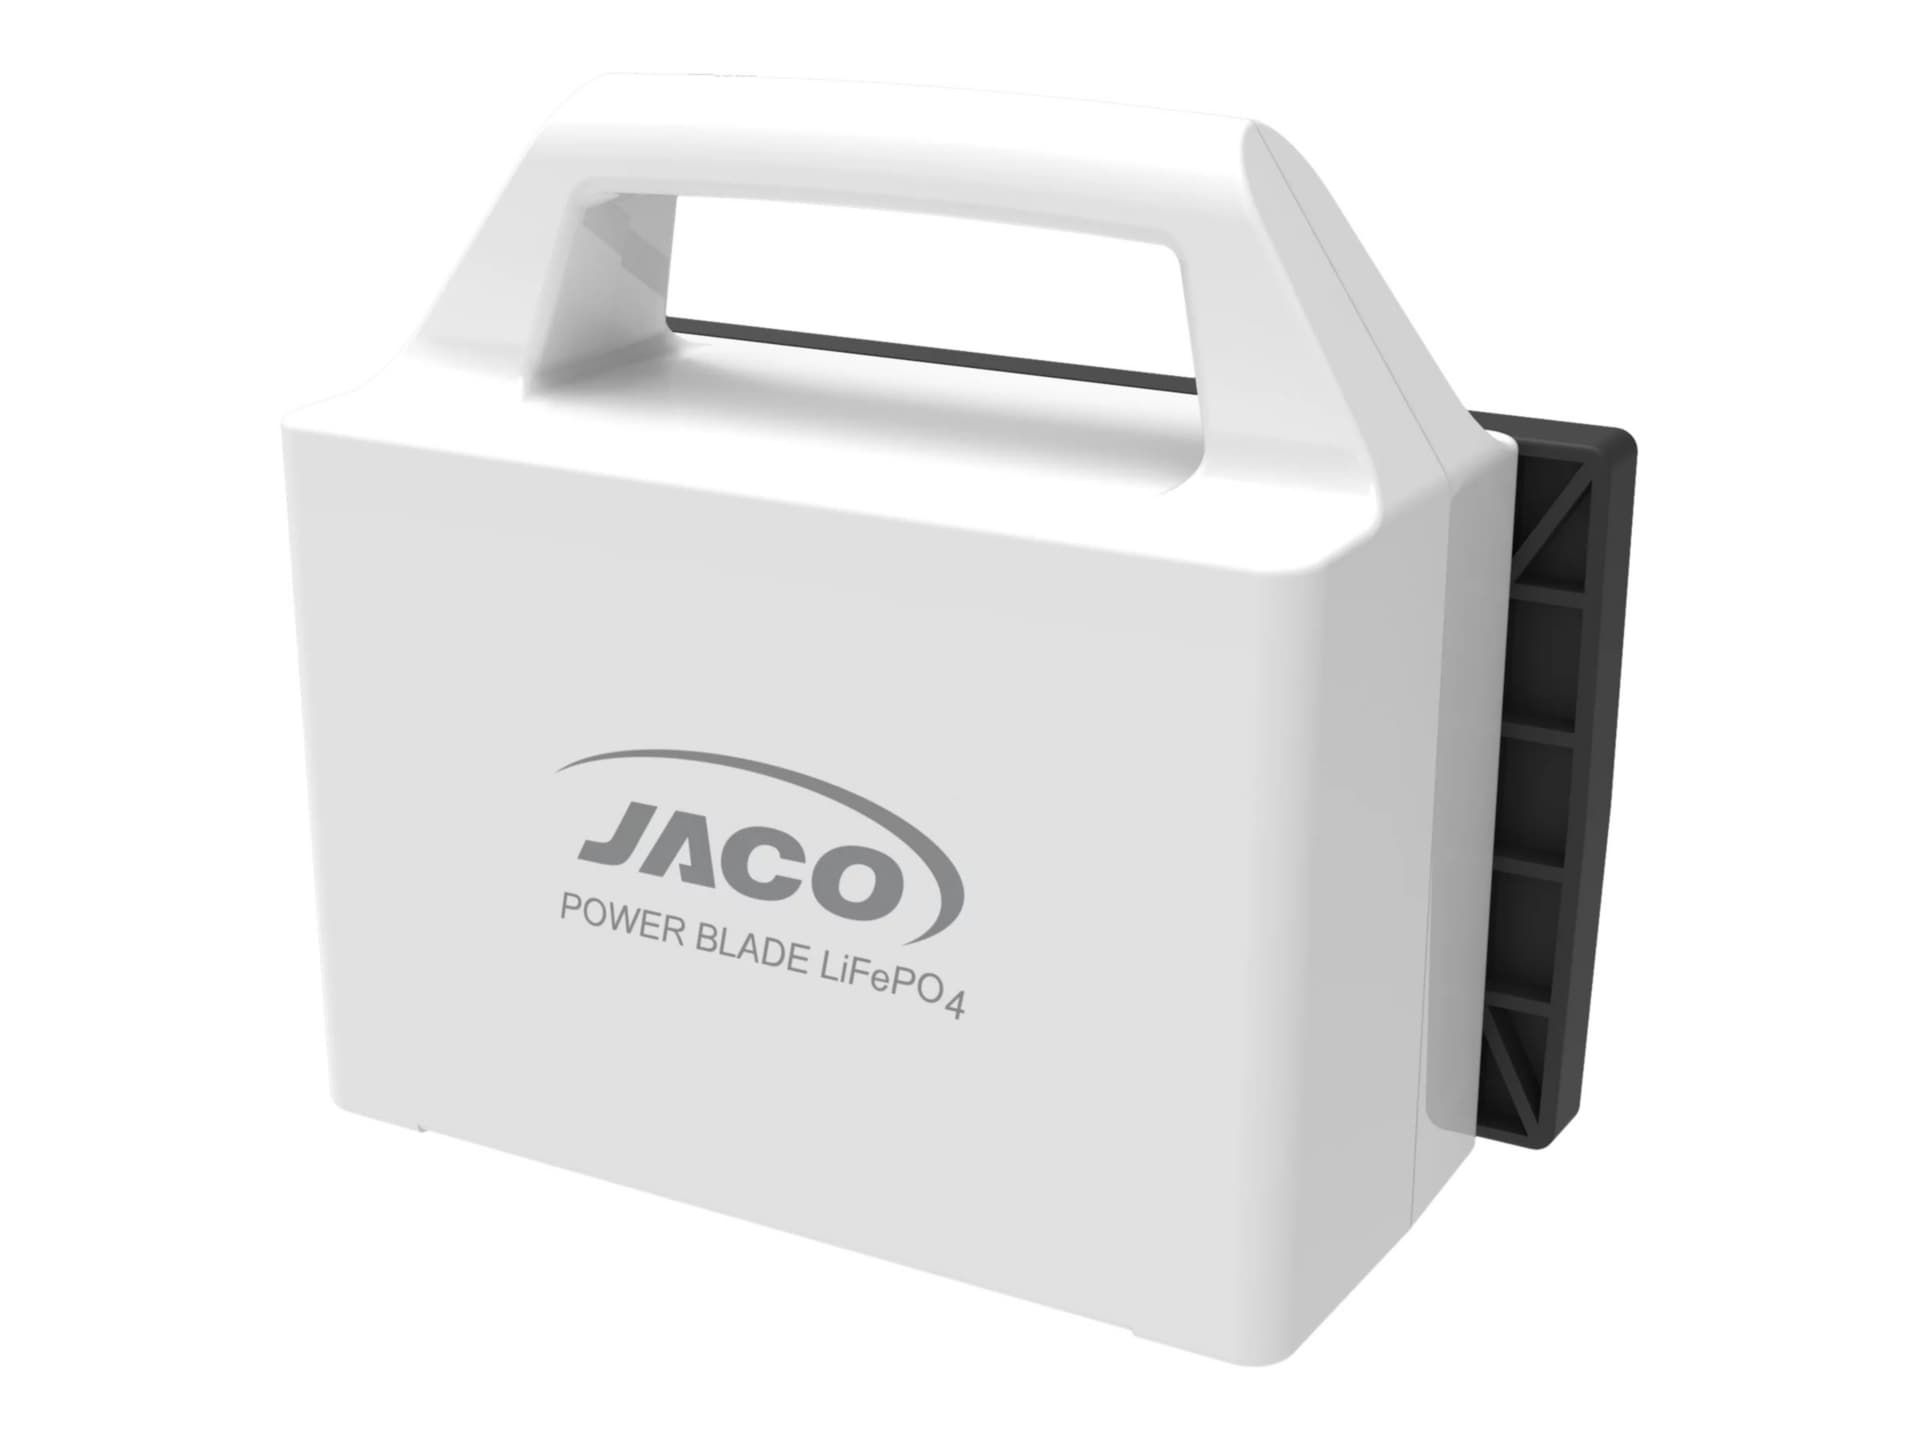 Jaco POWERBLADE LiFePO4 (Lithium Iron Phosphate) Hot Swap Battery